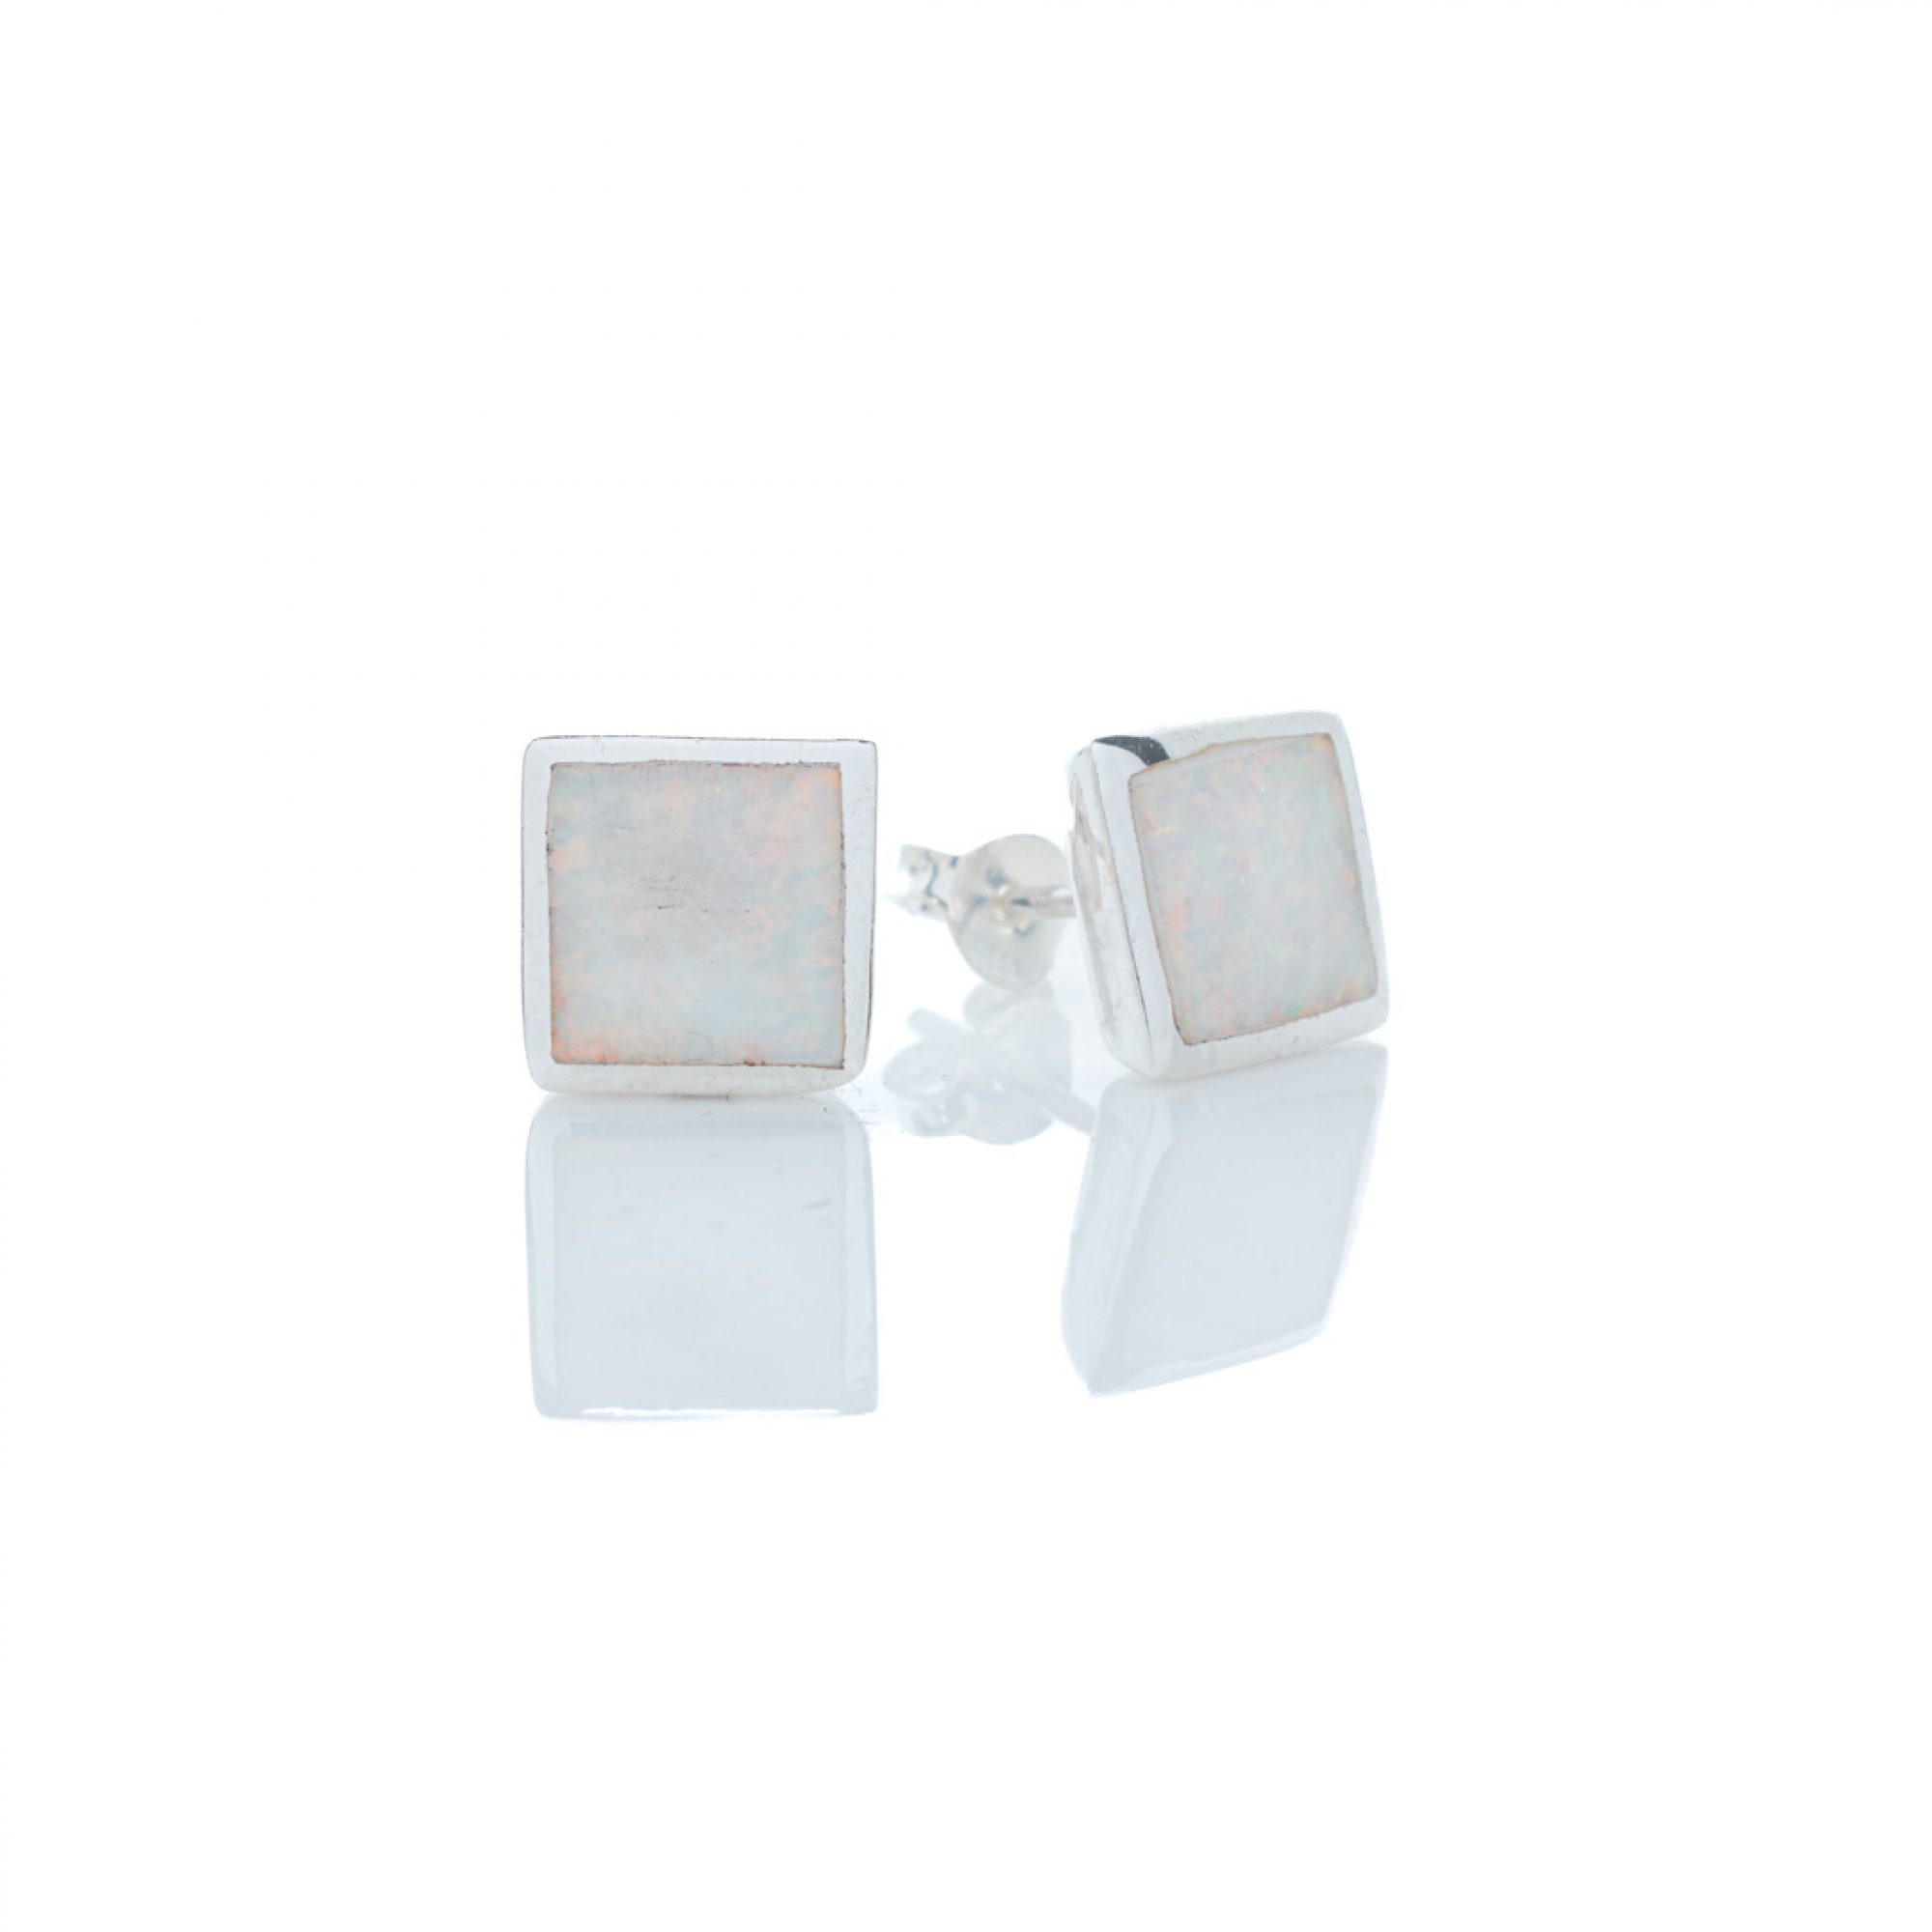 Stud earrings with white opal